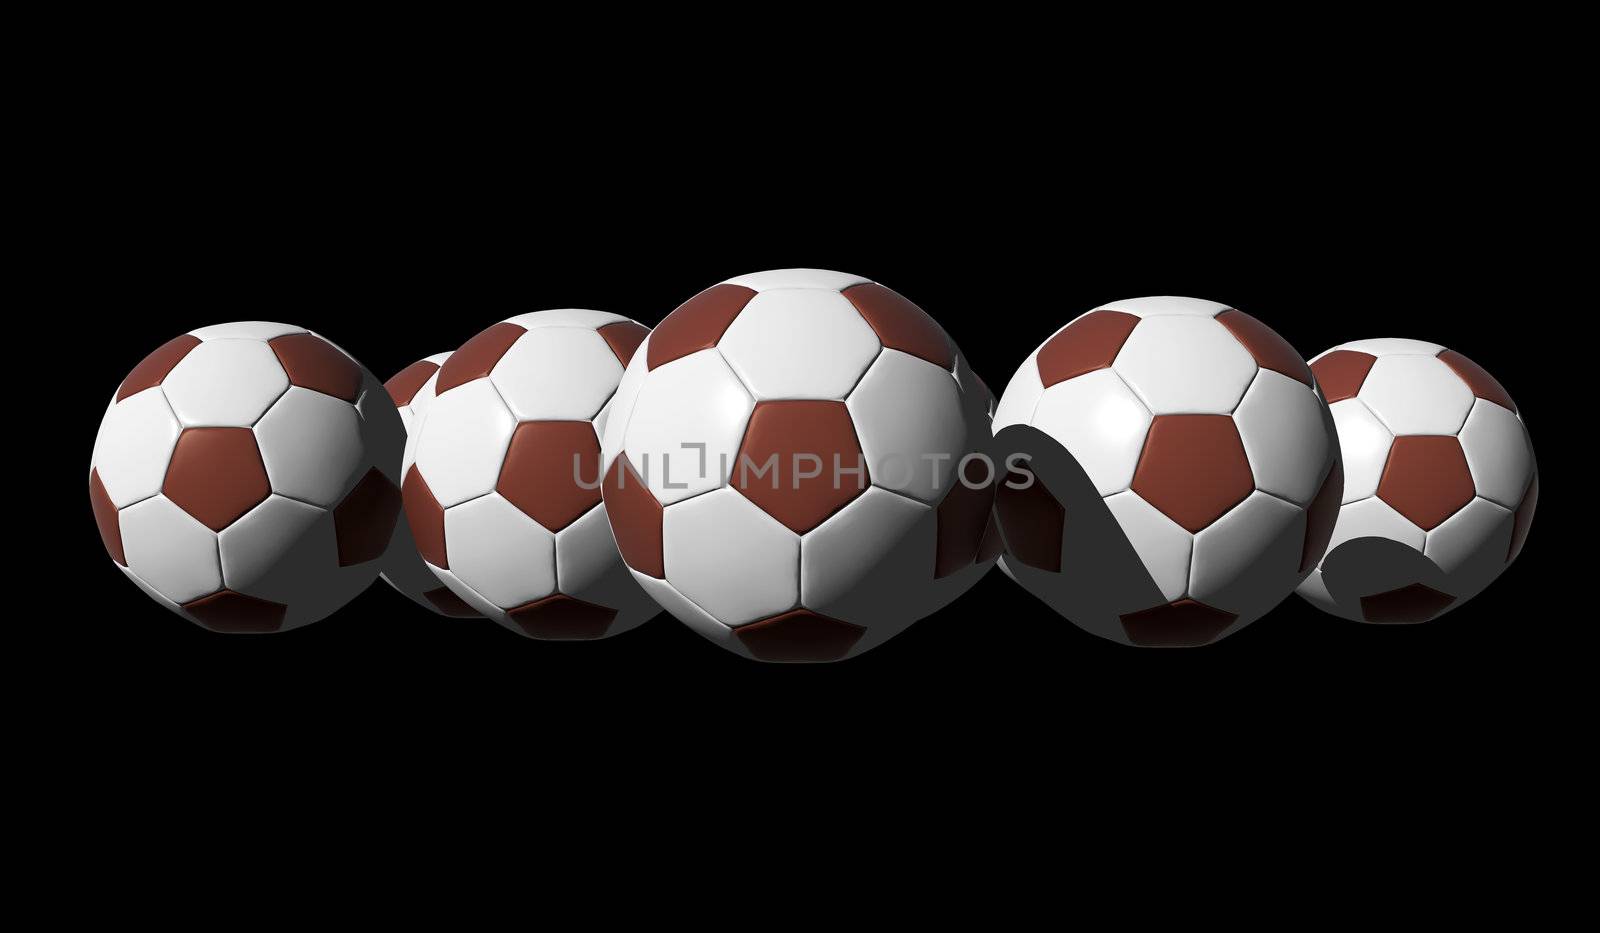 3D rendered soccer balls  by siraanamwong